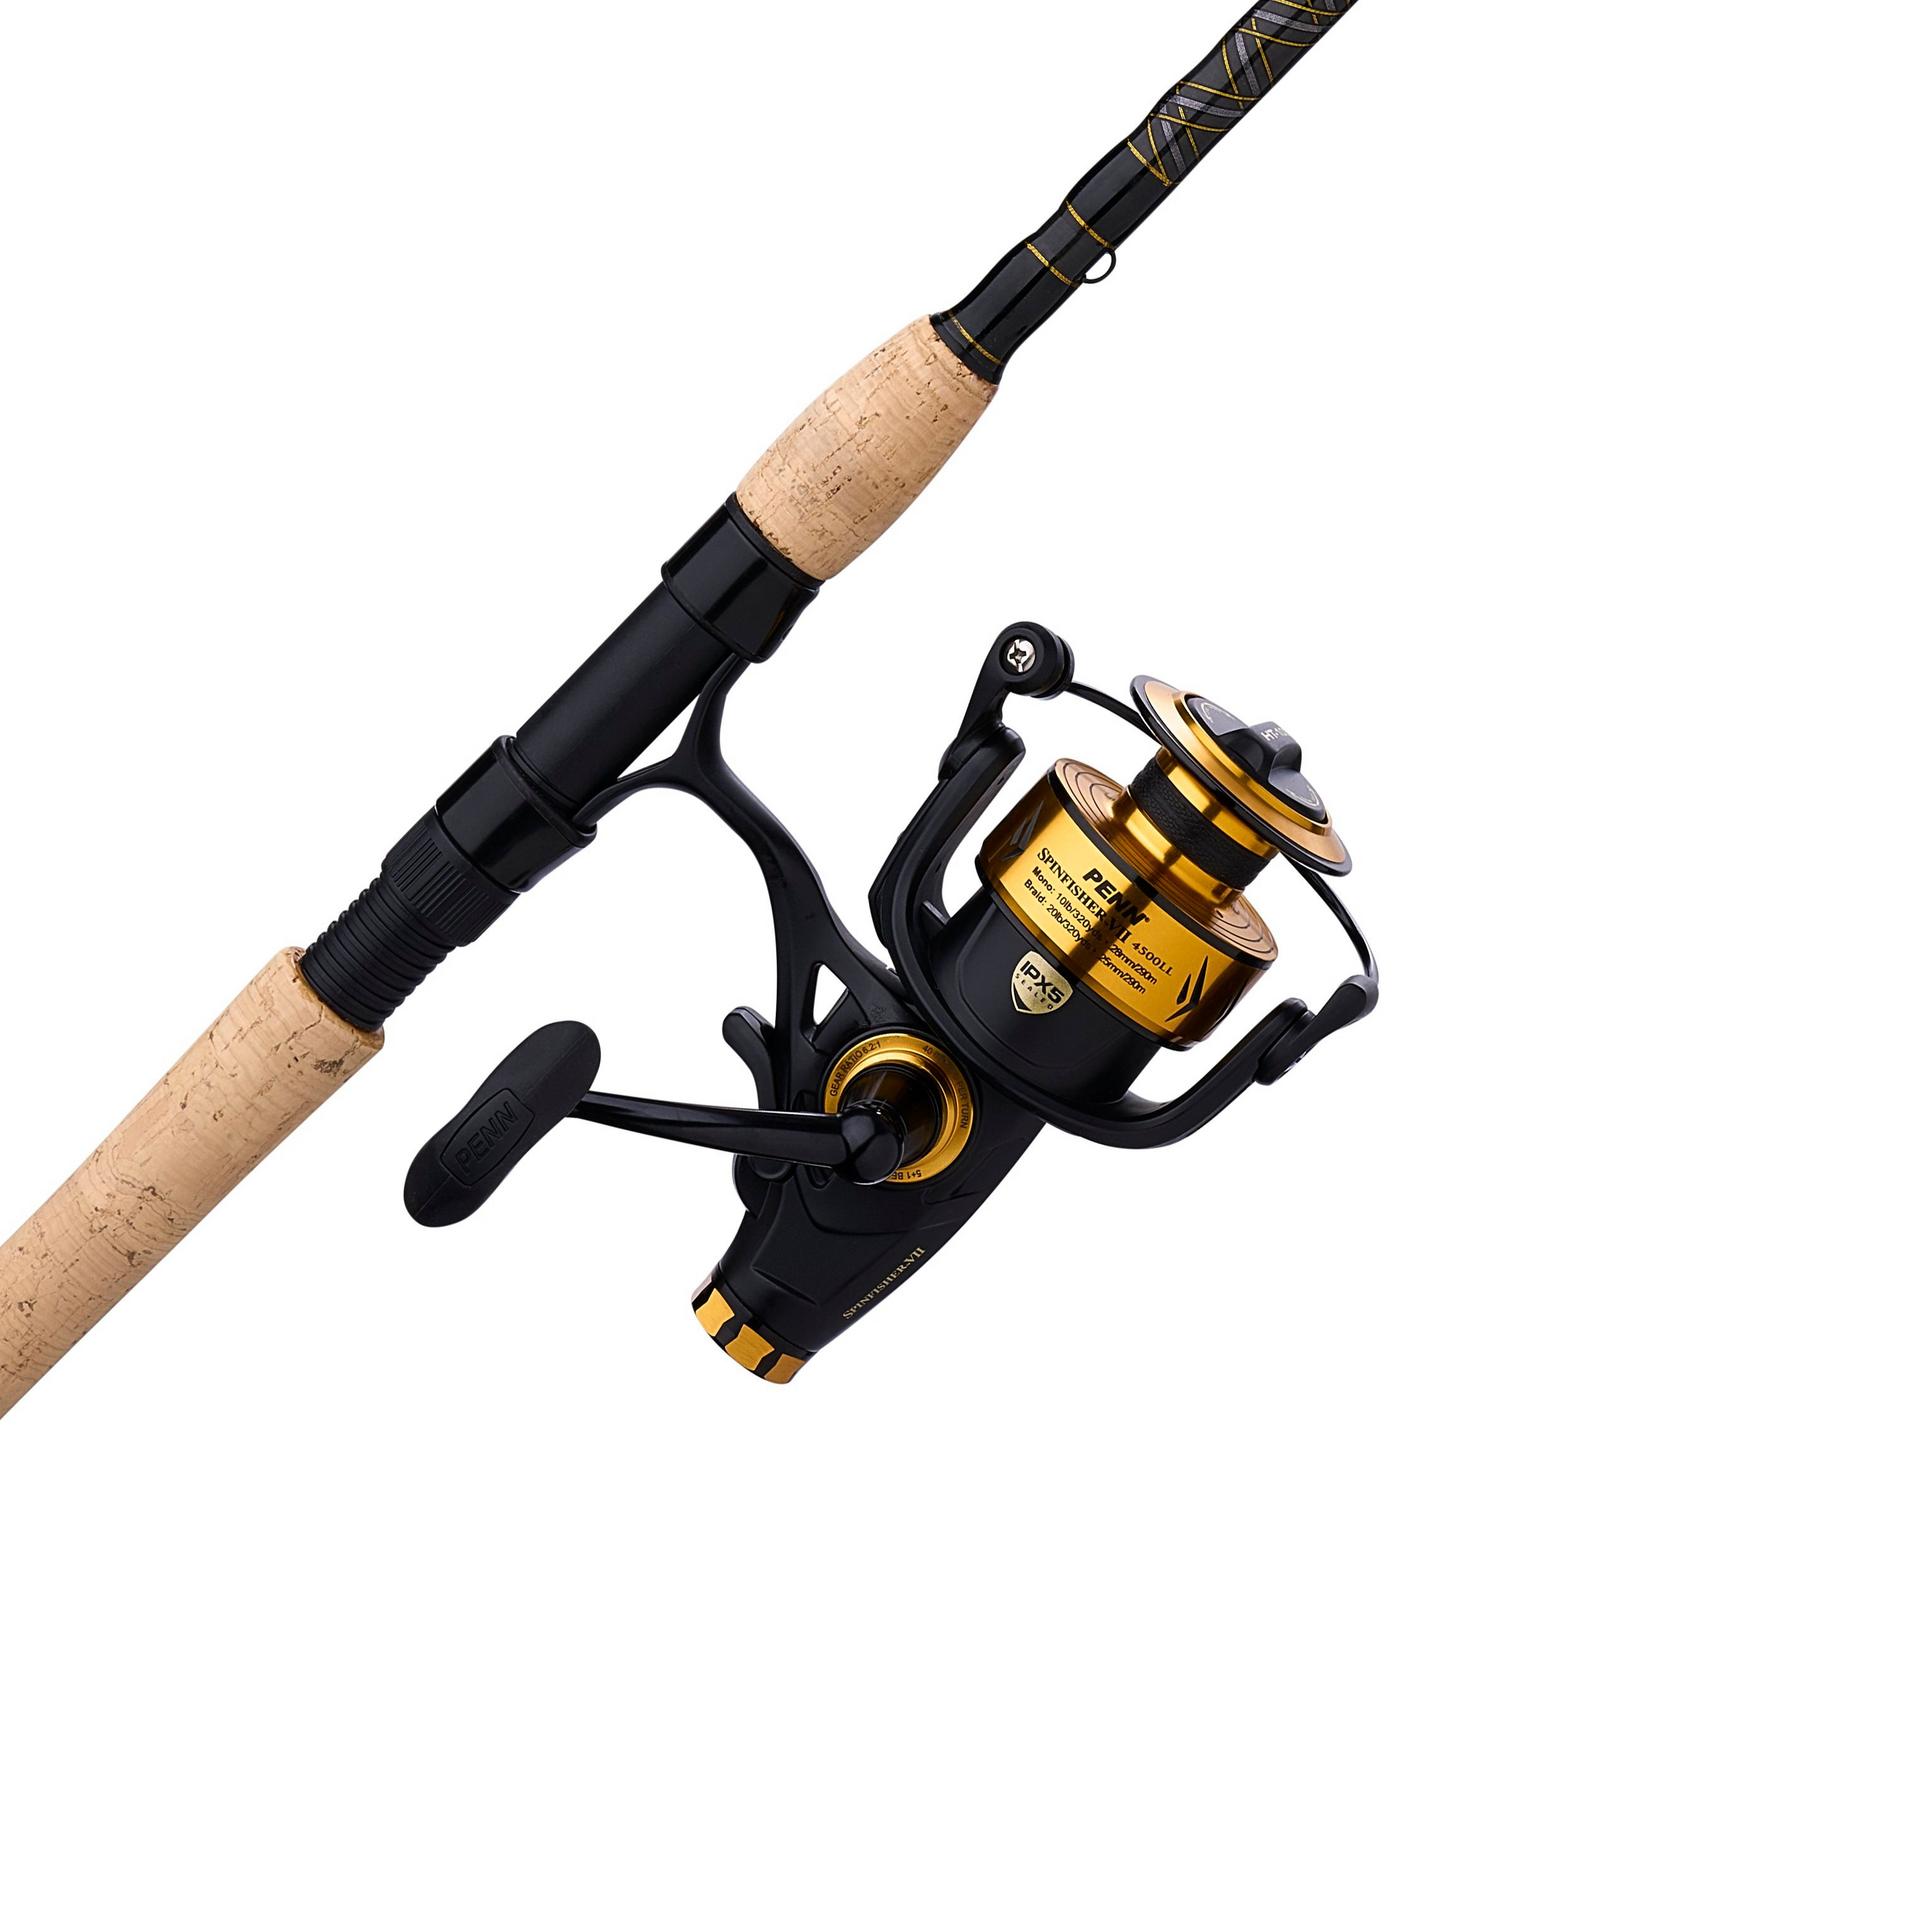 PENN 7' Battle III Fishing Rod and Reel Spinning Combo, 7', 1